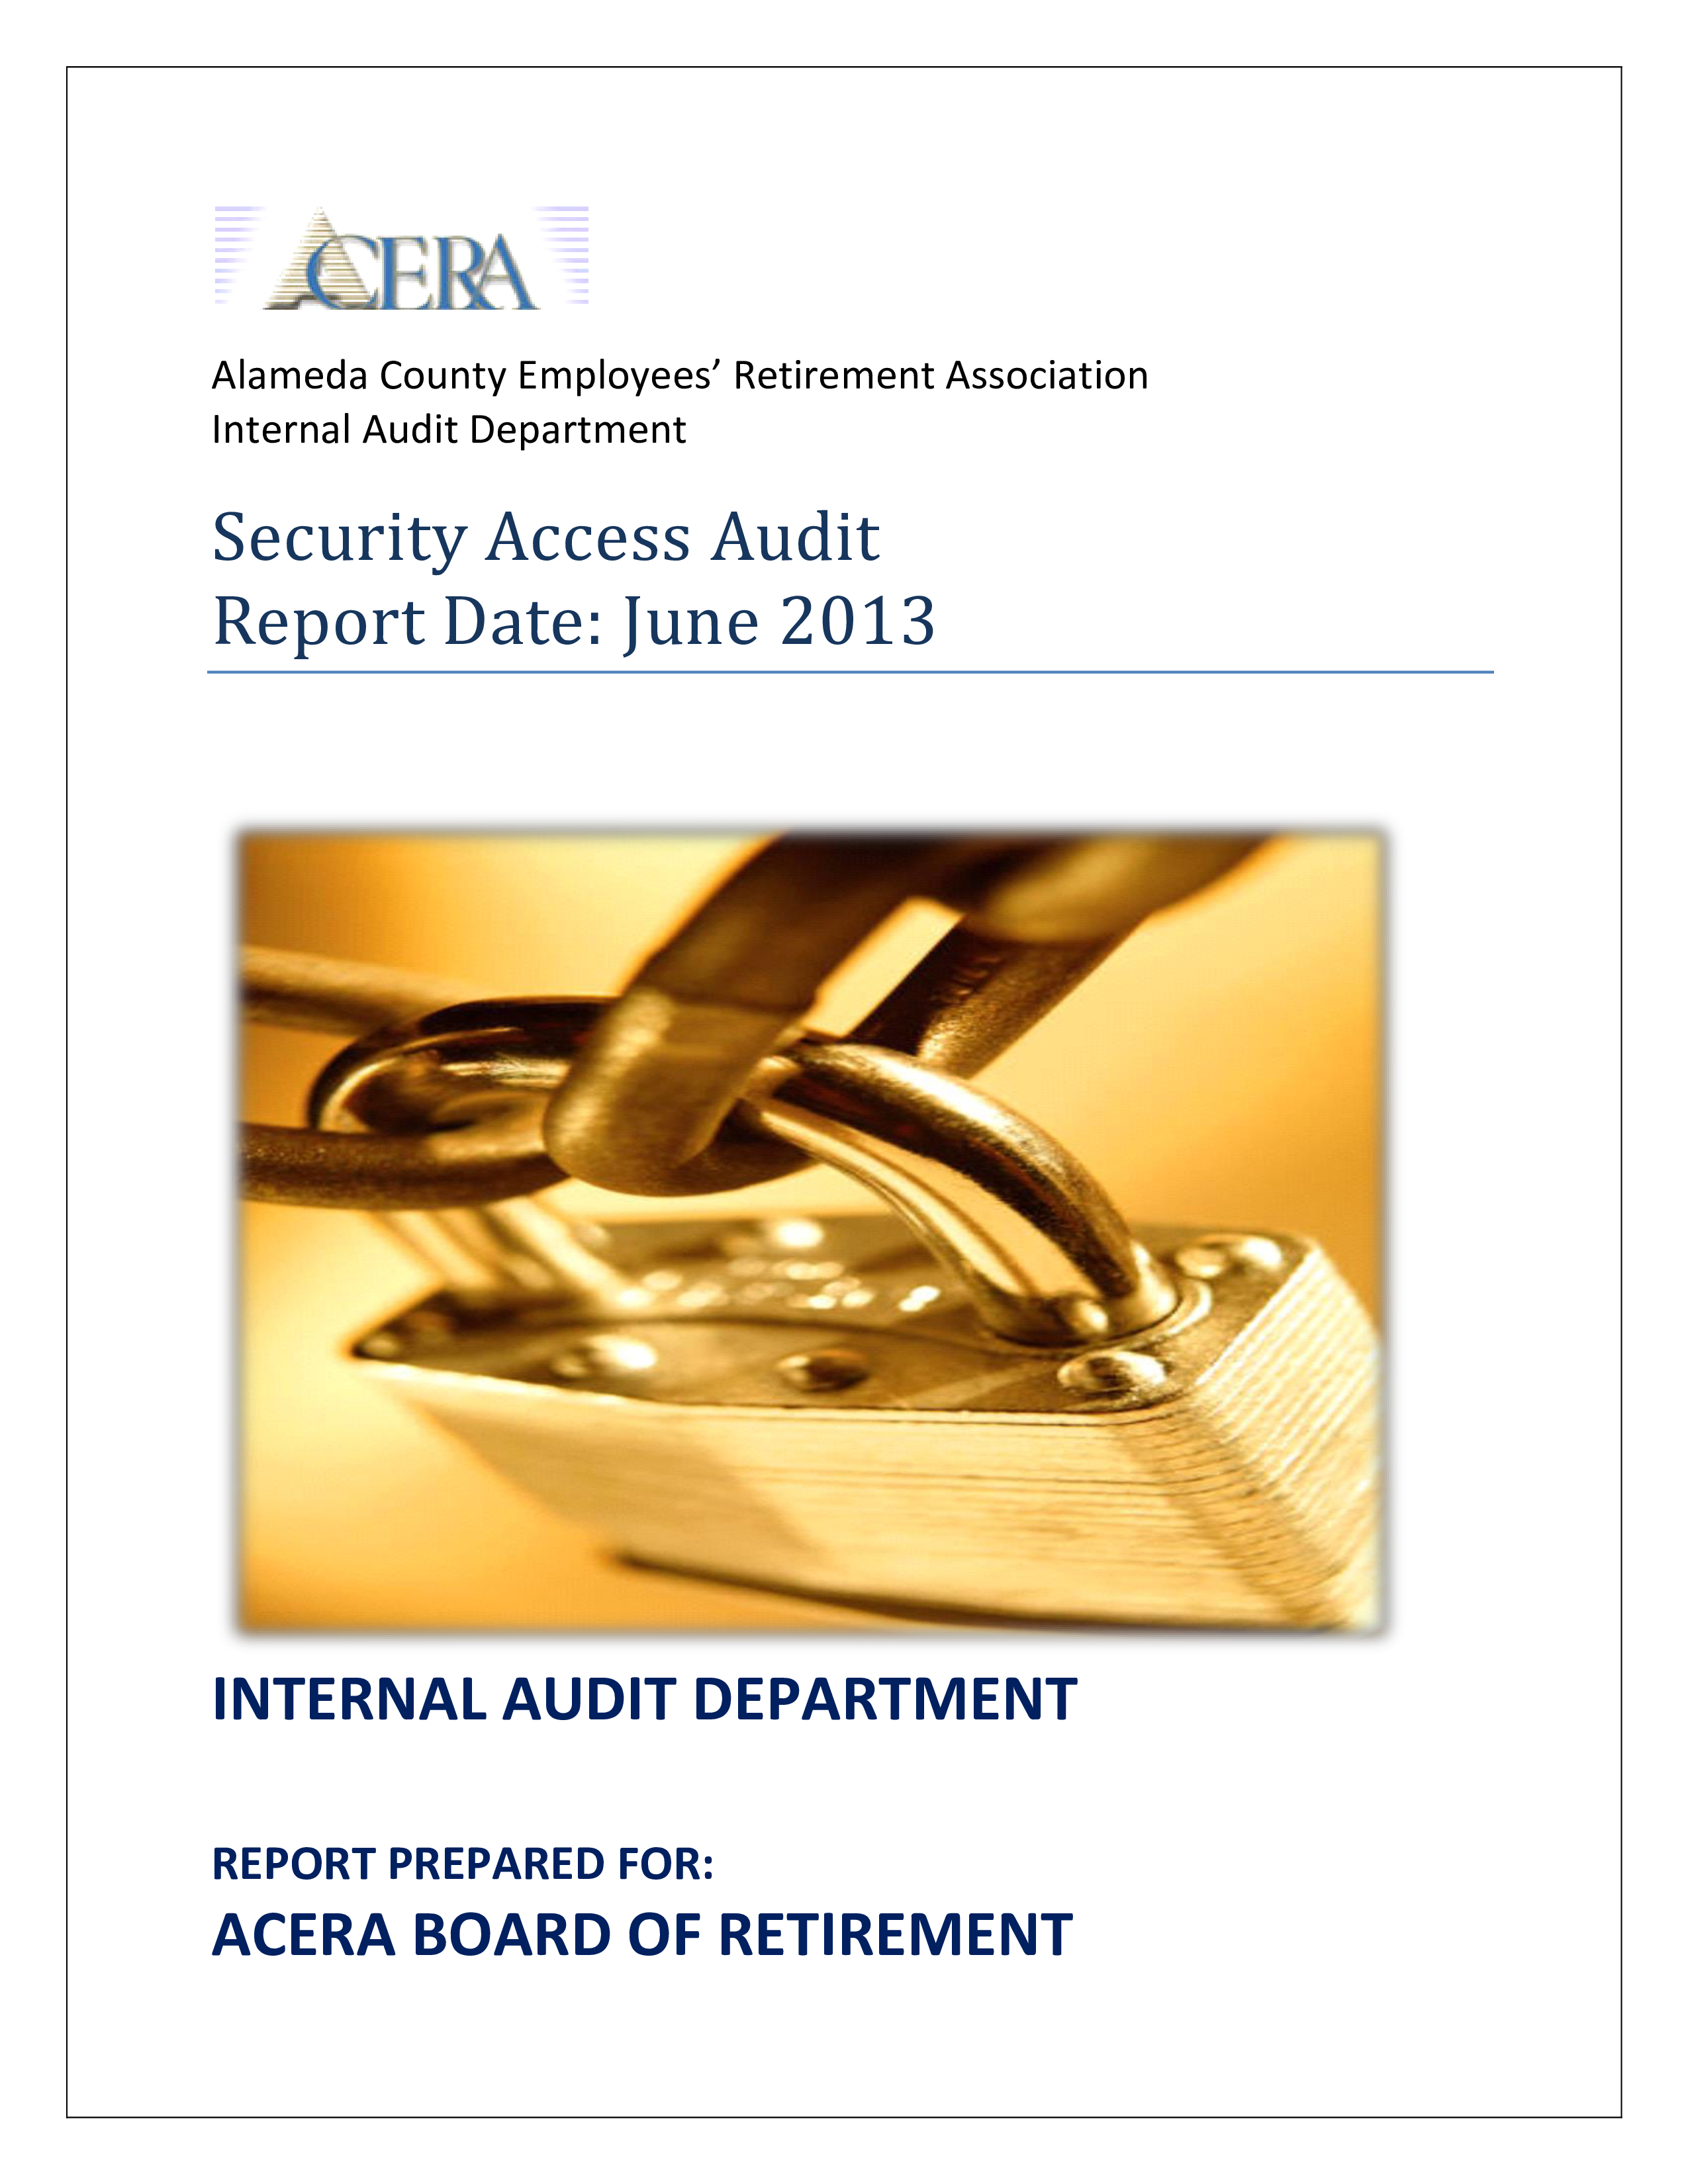 security access audit report plantilla imagen principal